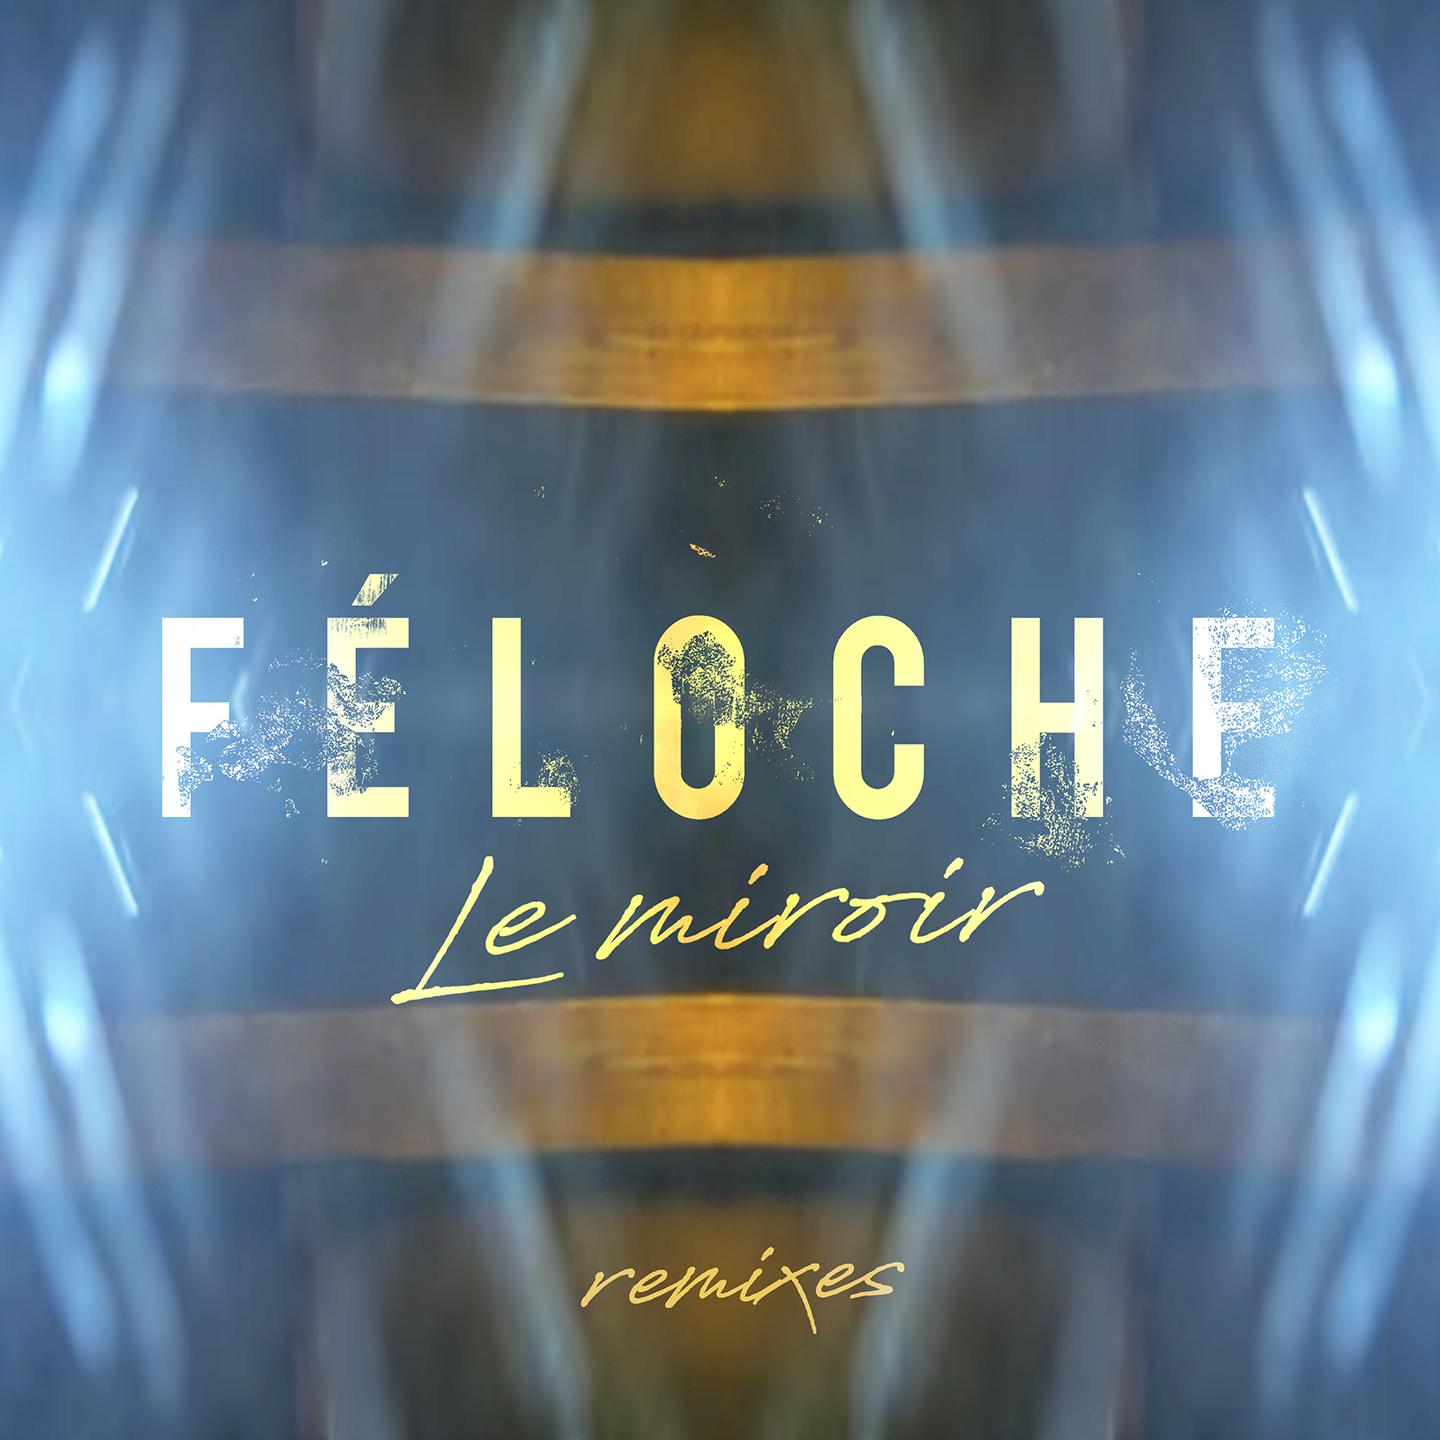 Le miroir (Remixes)